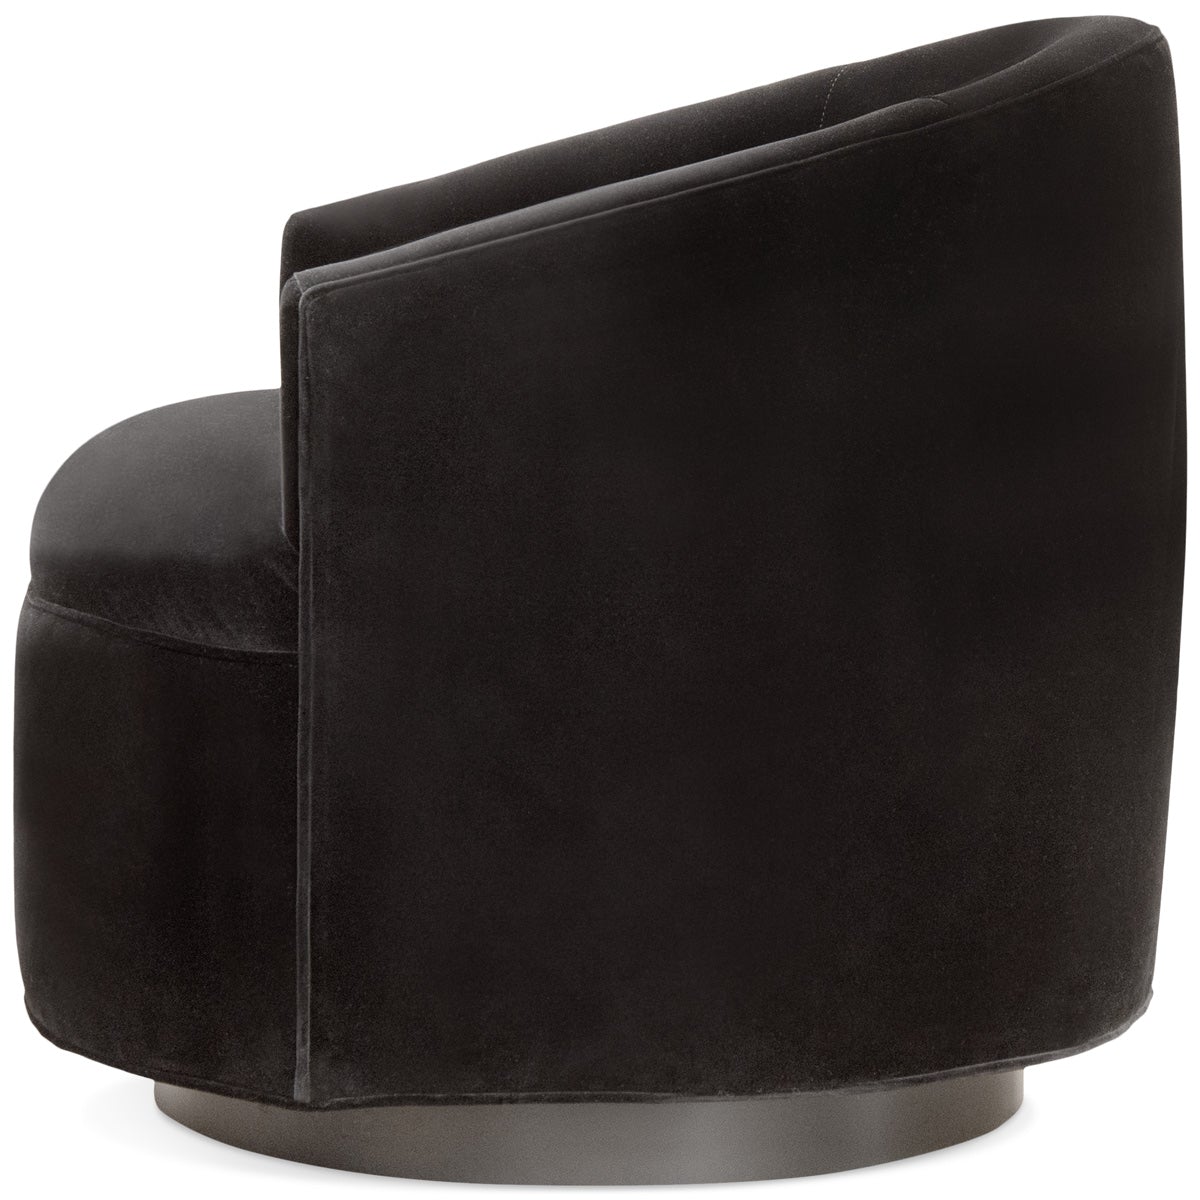 Fat Albert Chair with Matte Black Toe Kick - ModShop1.com